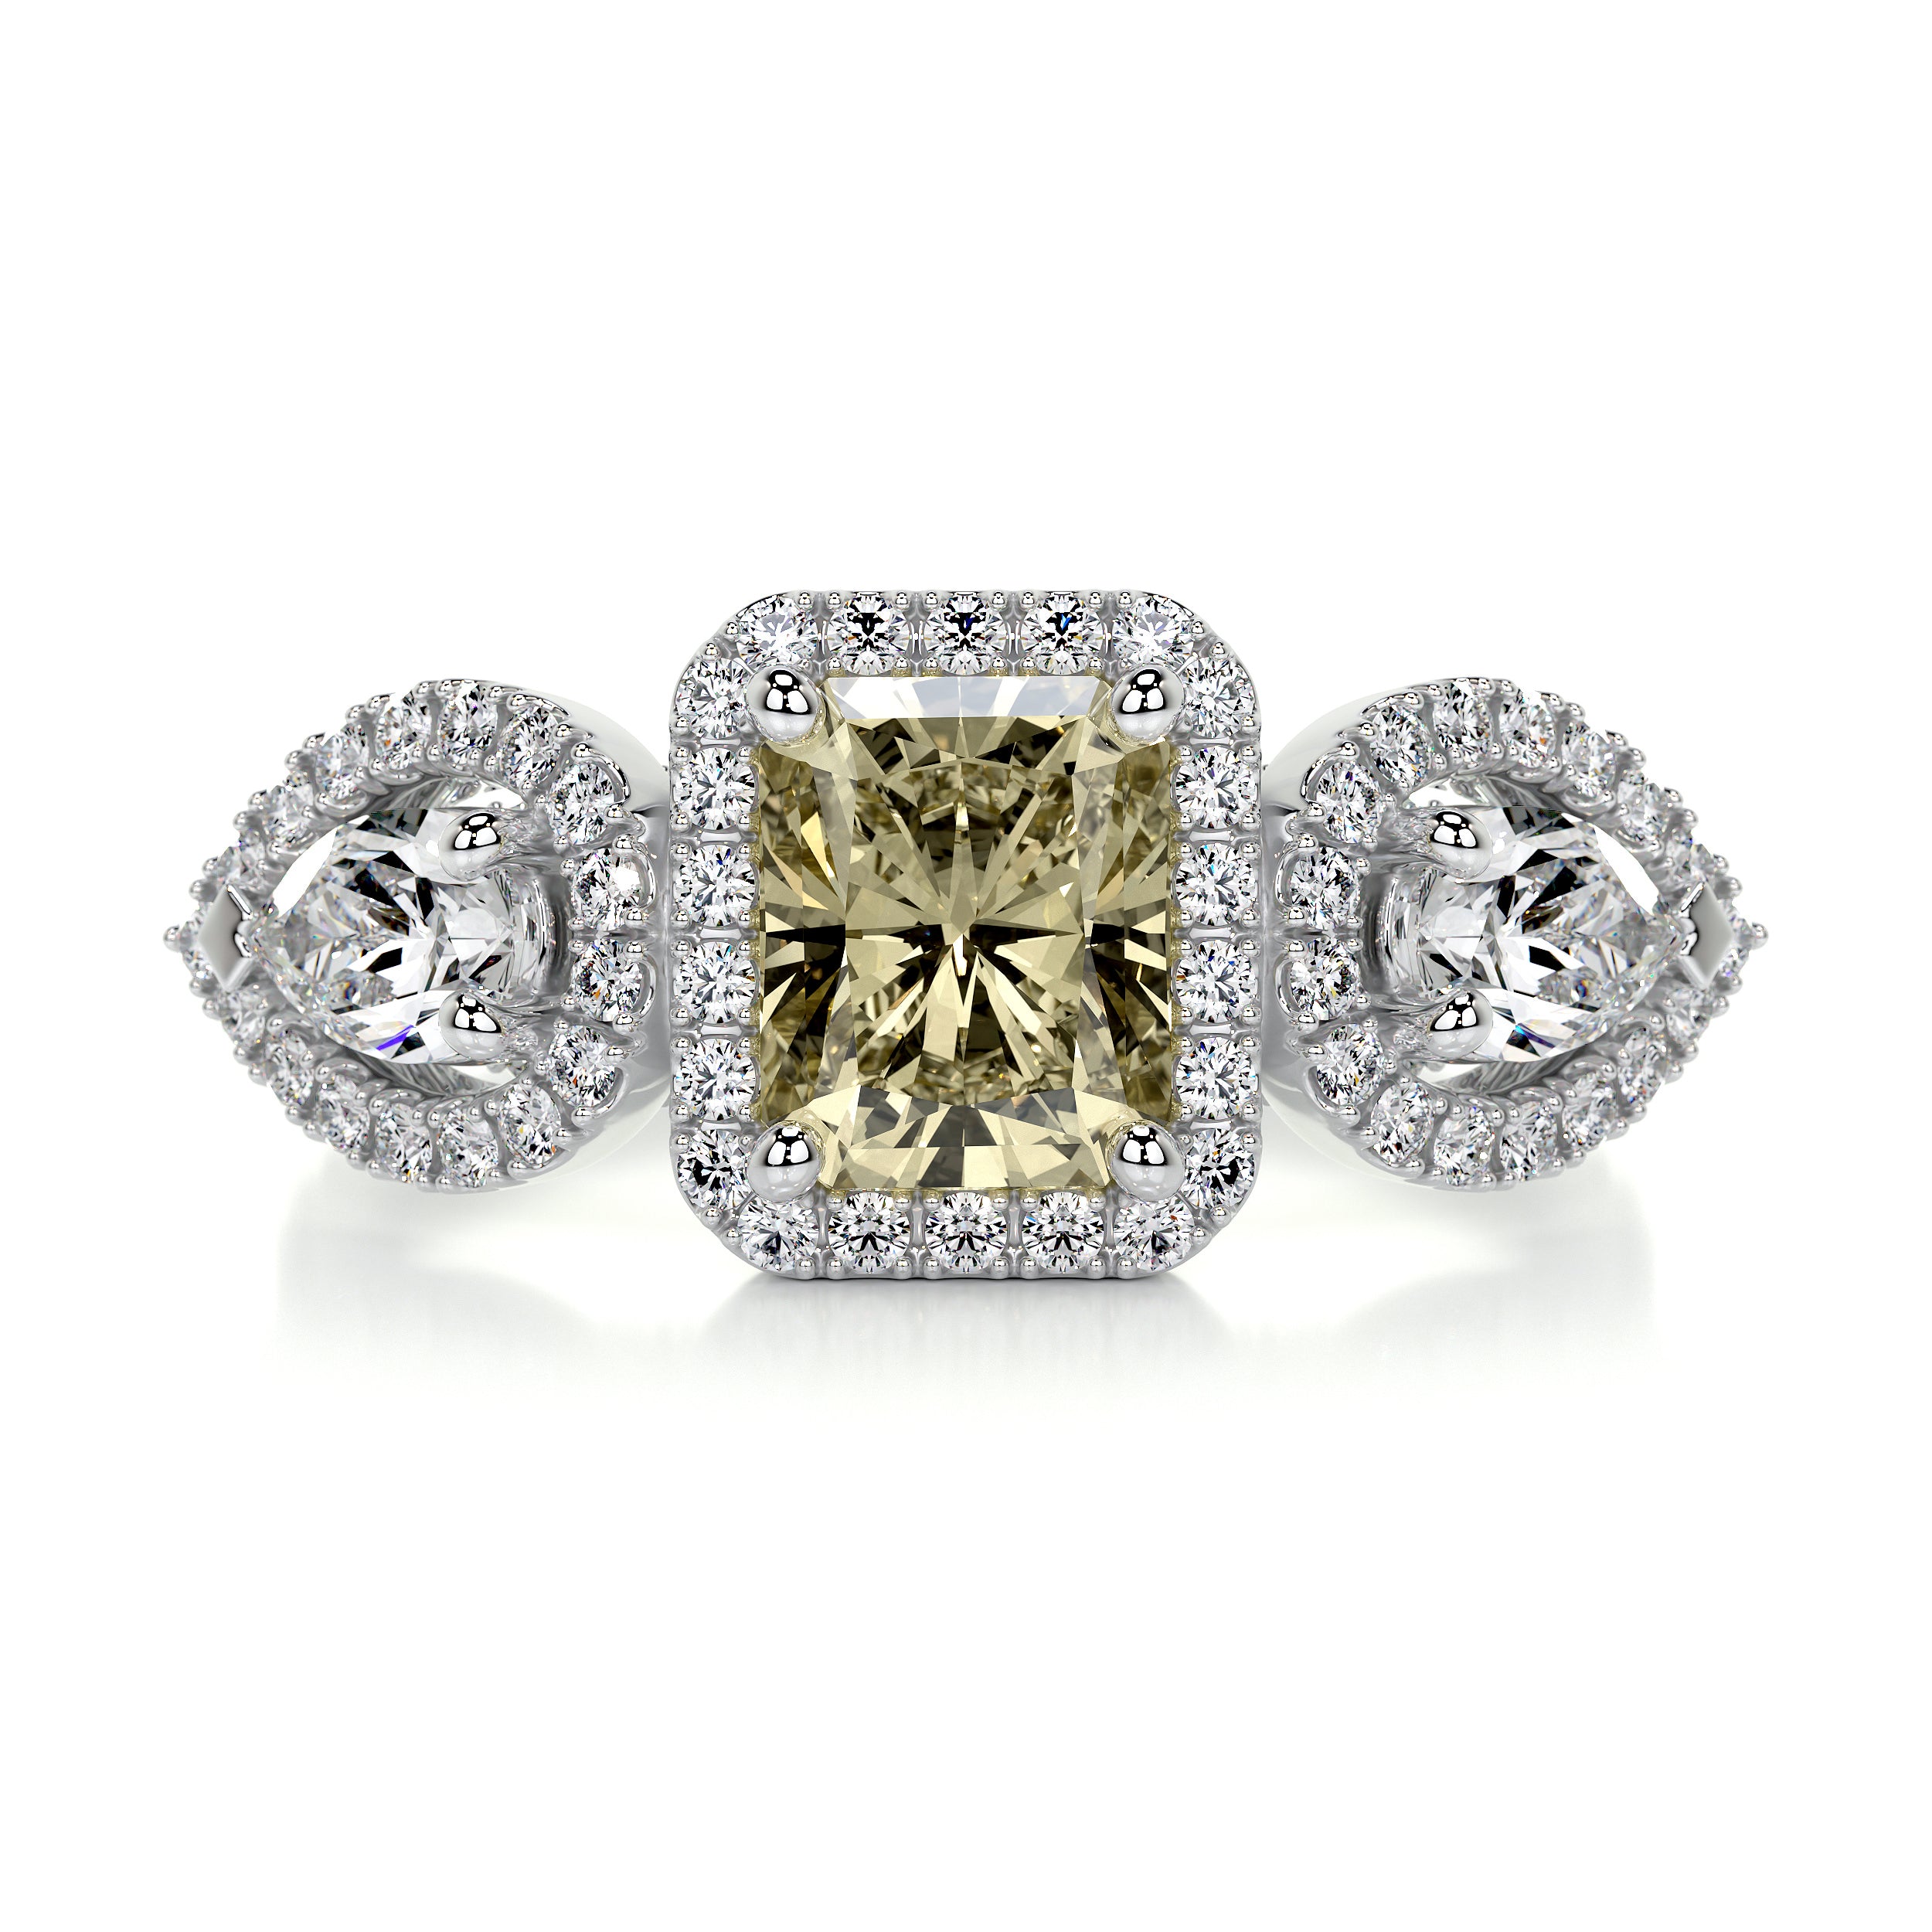 Violet Diamond Engagement Ring   (2.25 Carat) - 14K White Gold